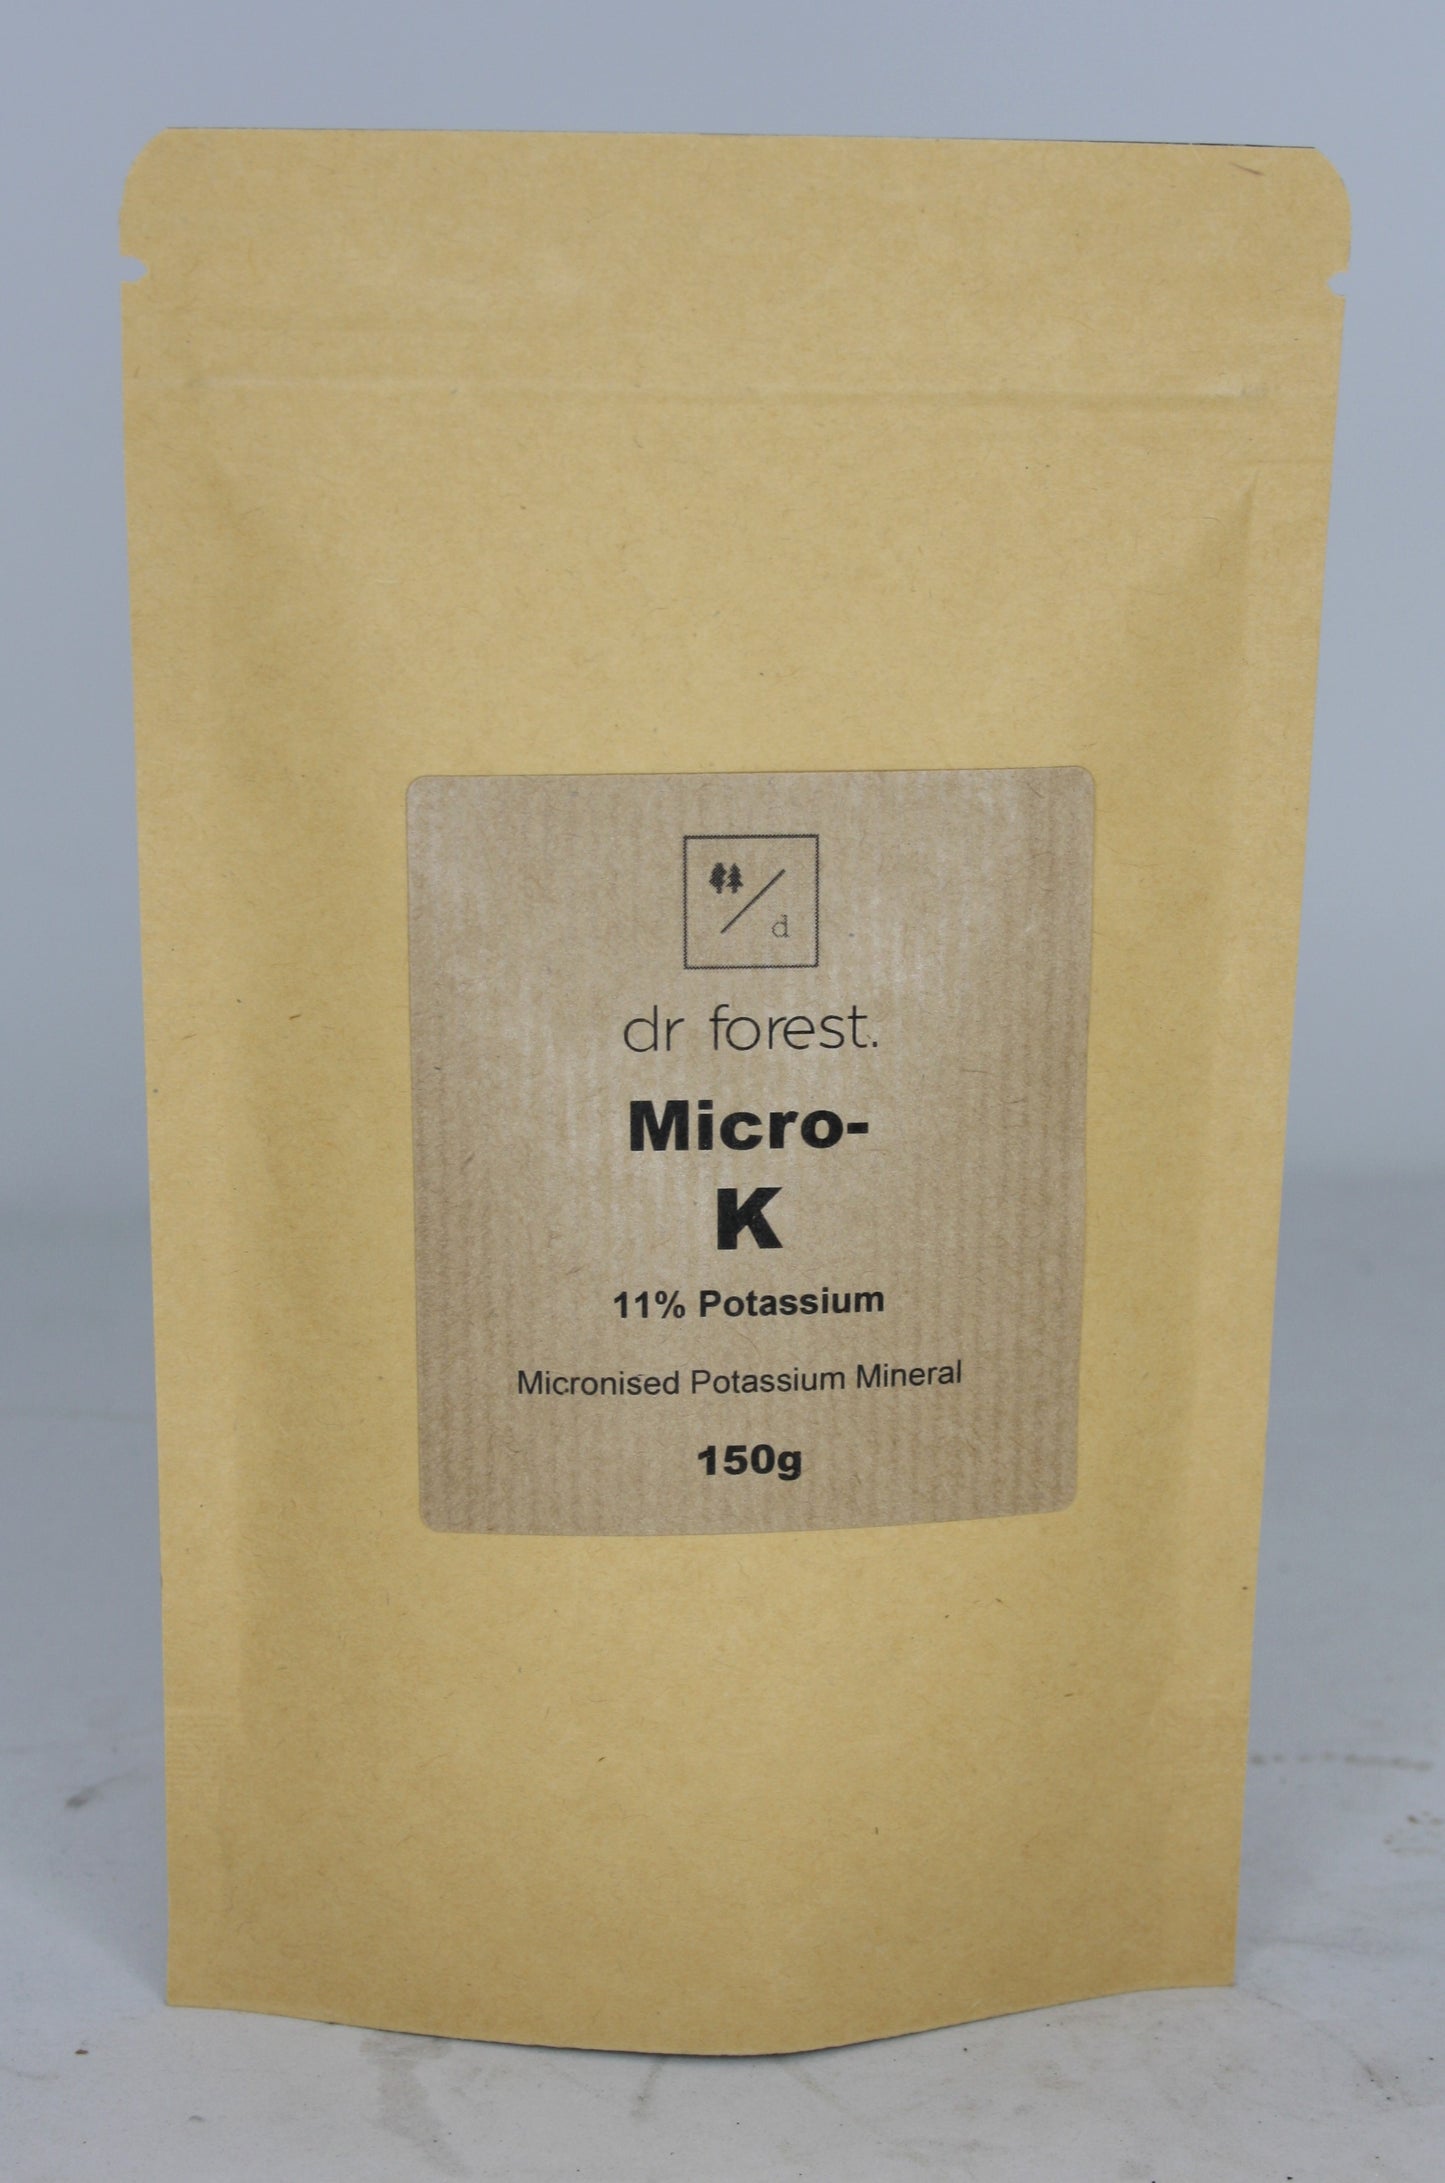 Micro-K. Organic Micronised Potassium Fertiliser. Solution Grade Dr Forest